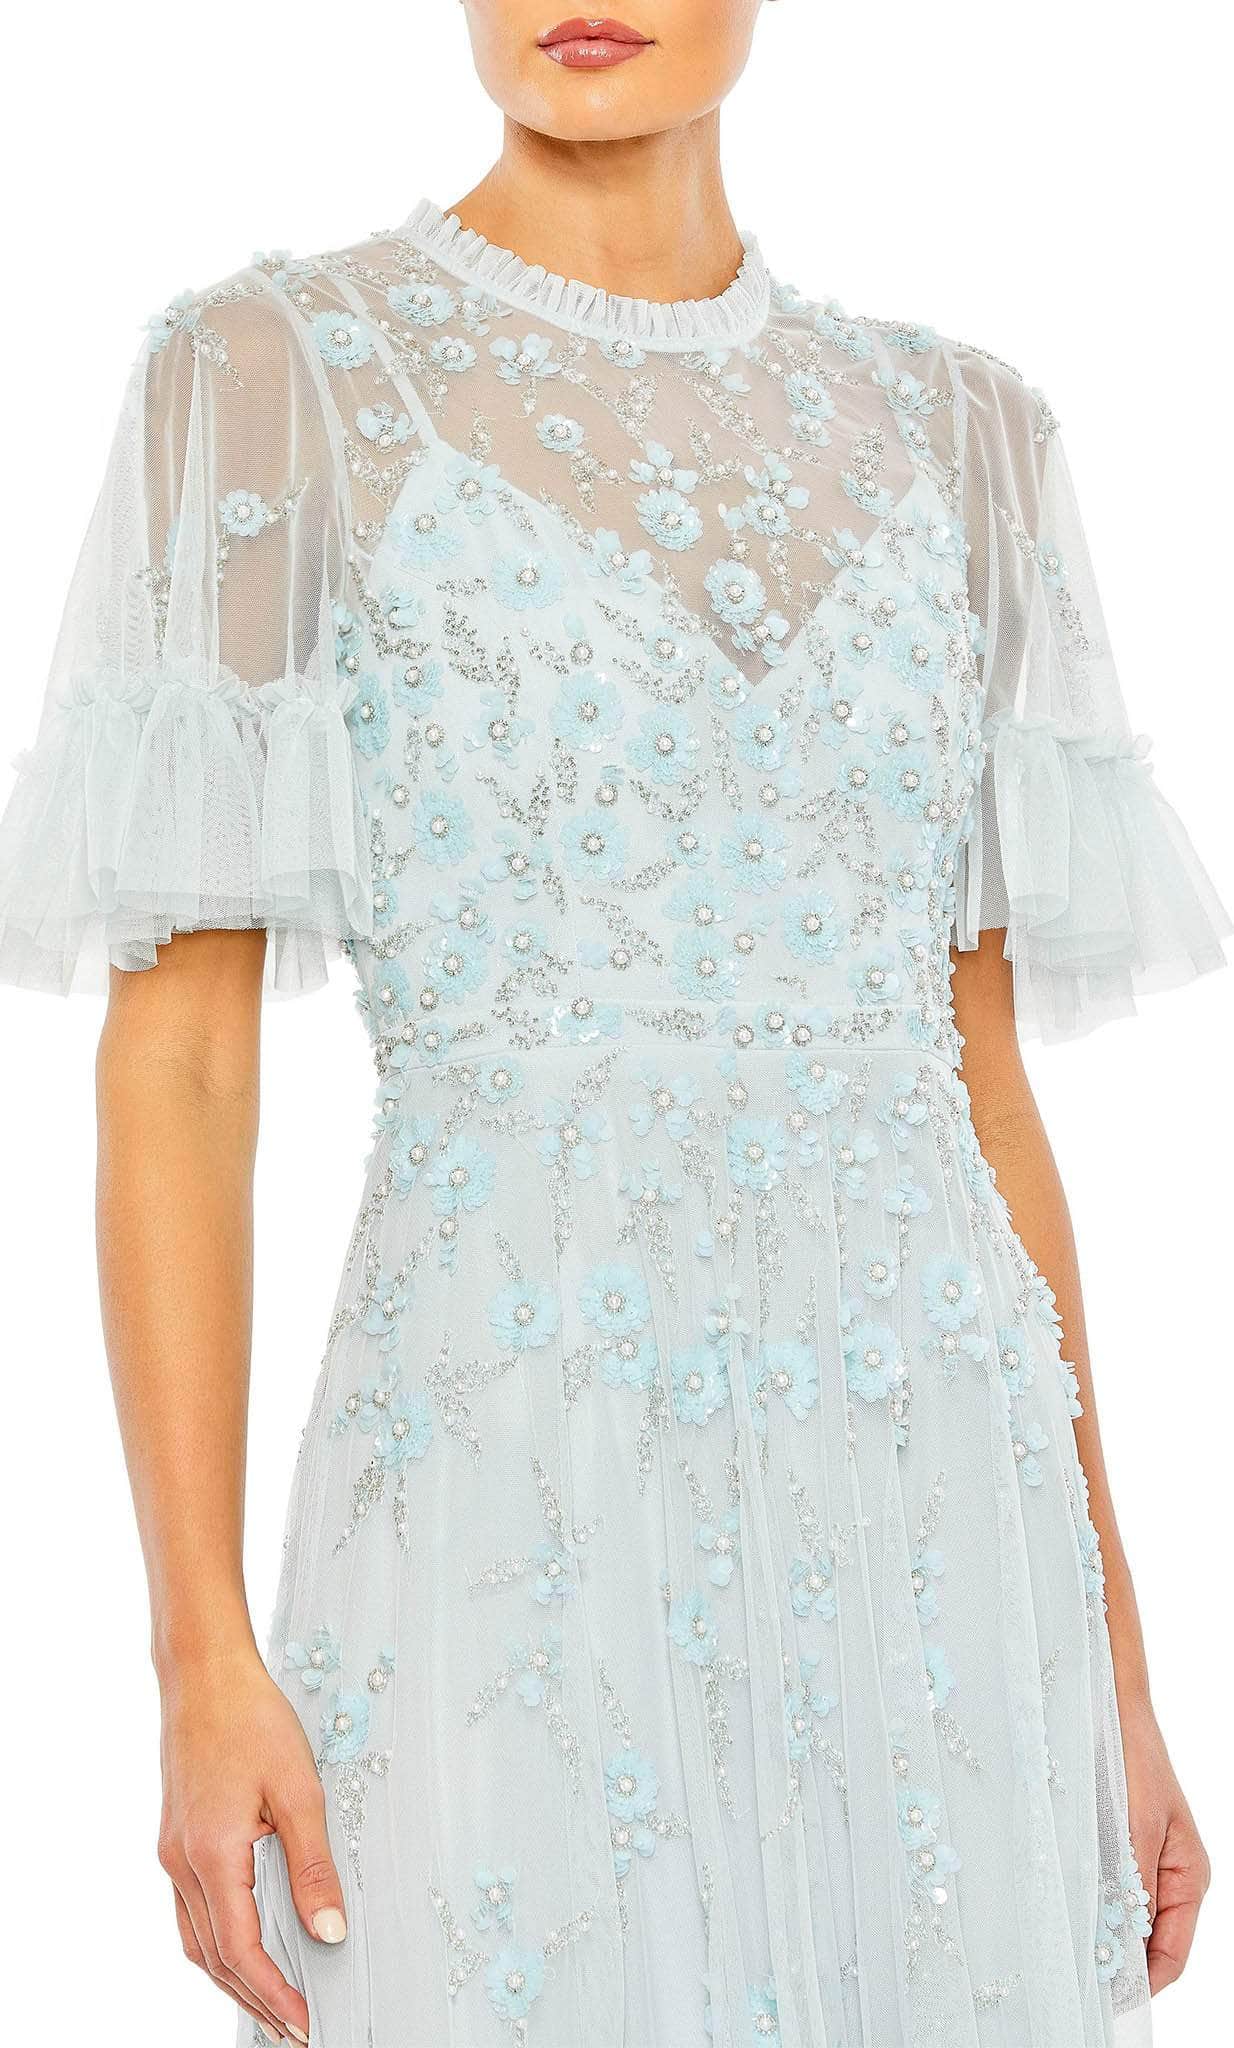 Mac Duggal 9199 - Floral Embellished A-line Evening Dress Special Occasion Dress